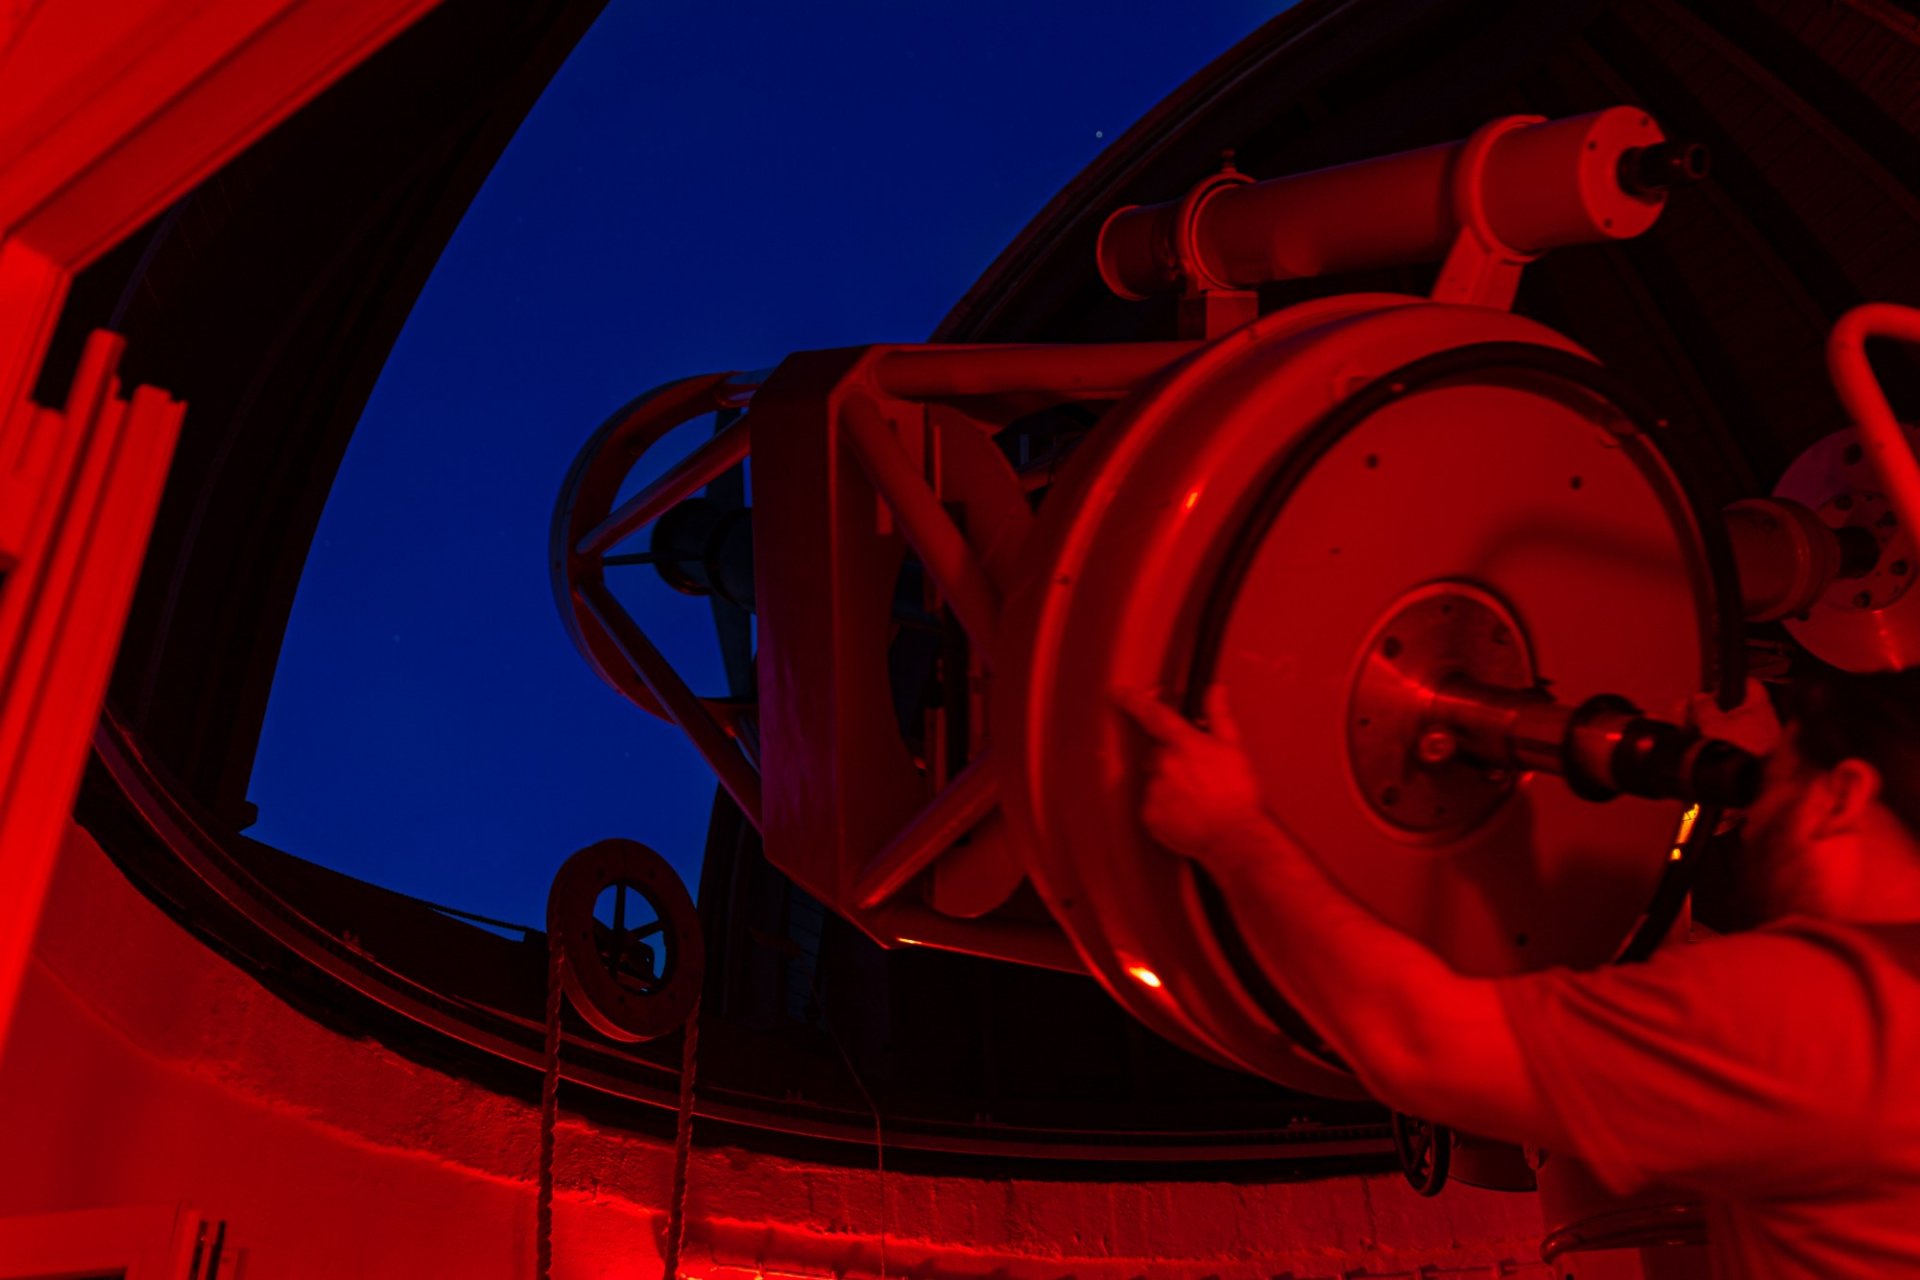 Beobachtungsabend am 60cm Spiegelteleskop (2000)